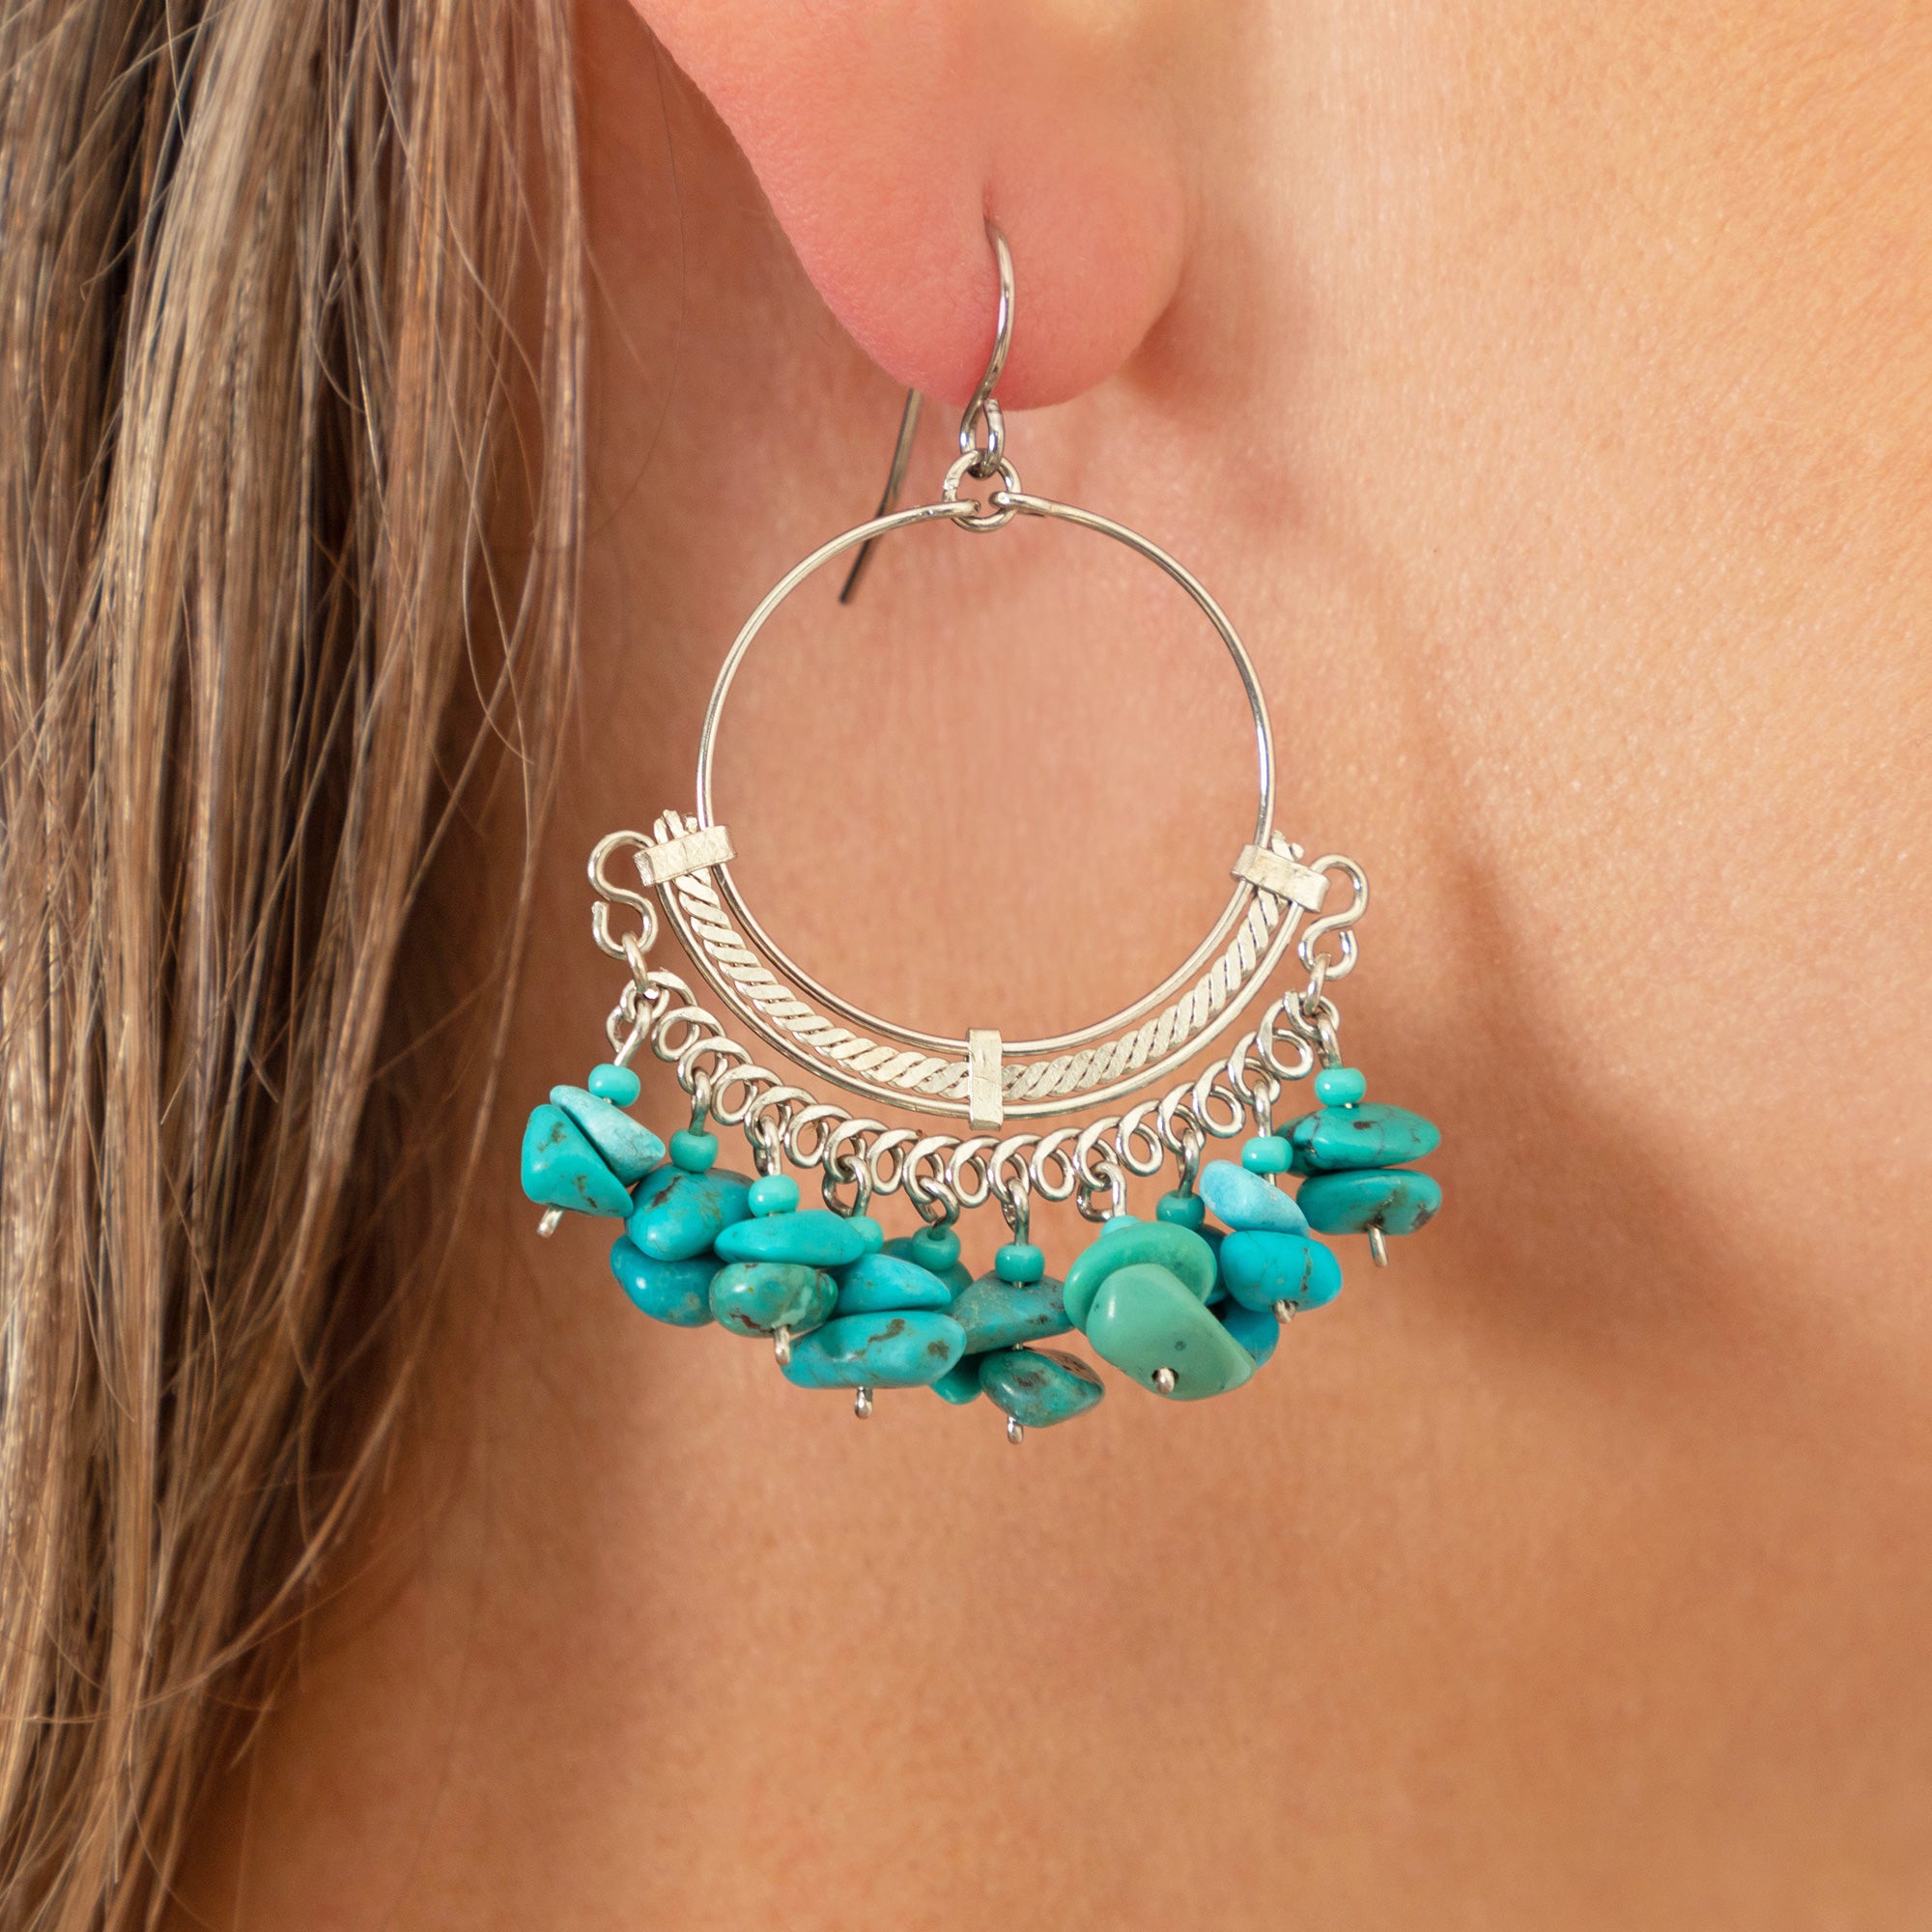 Endless Treasures Dangling Earrings - Turquoise